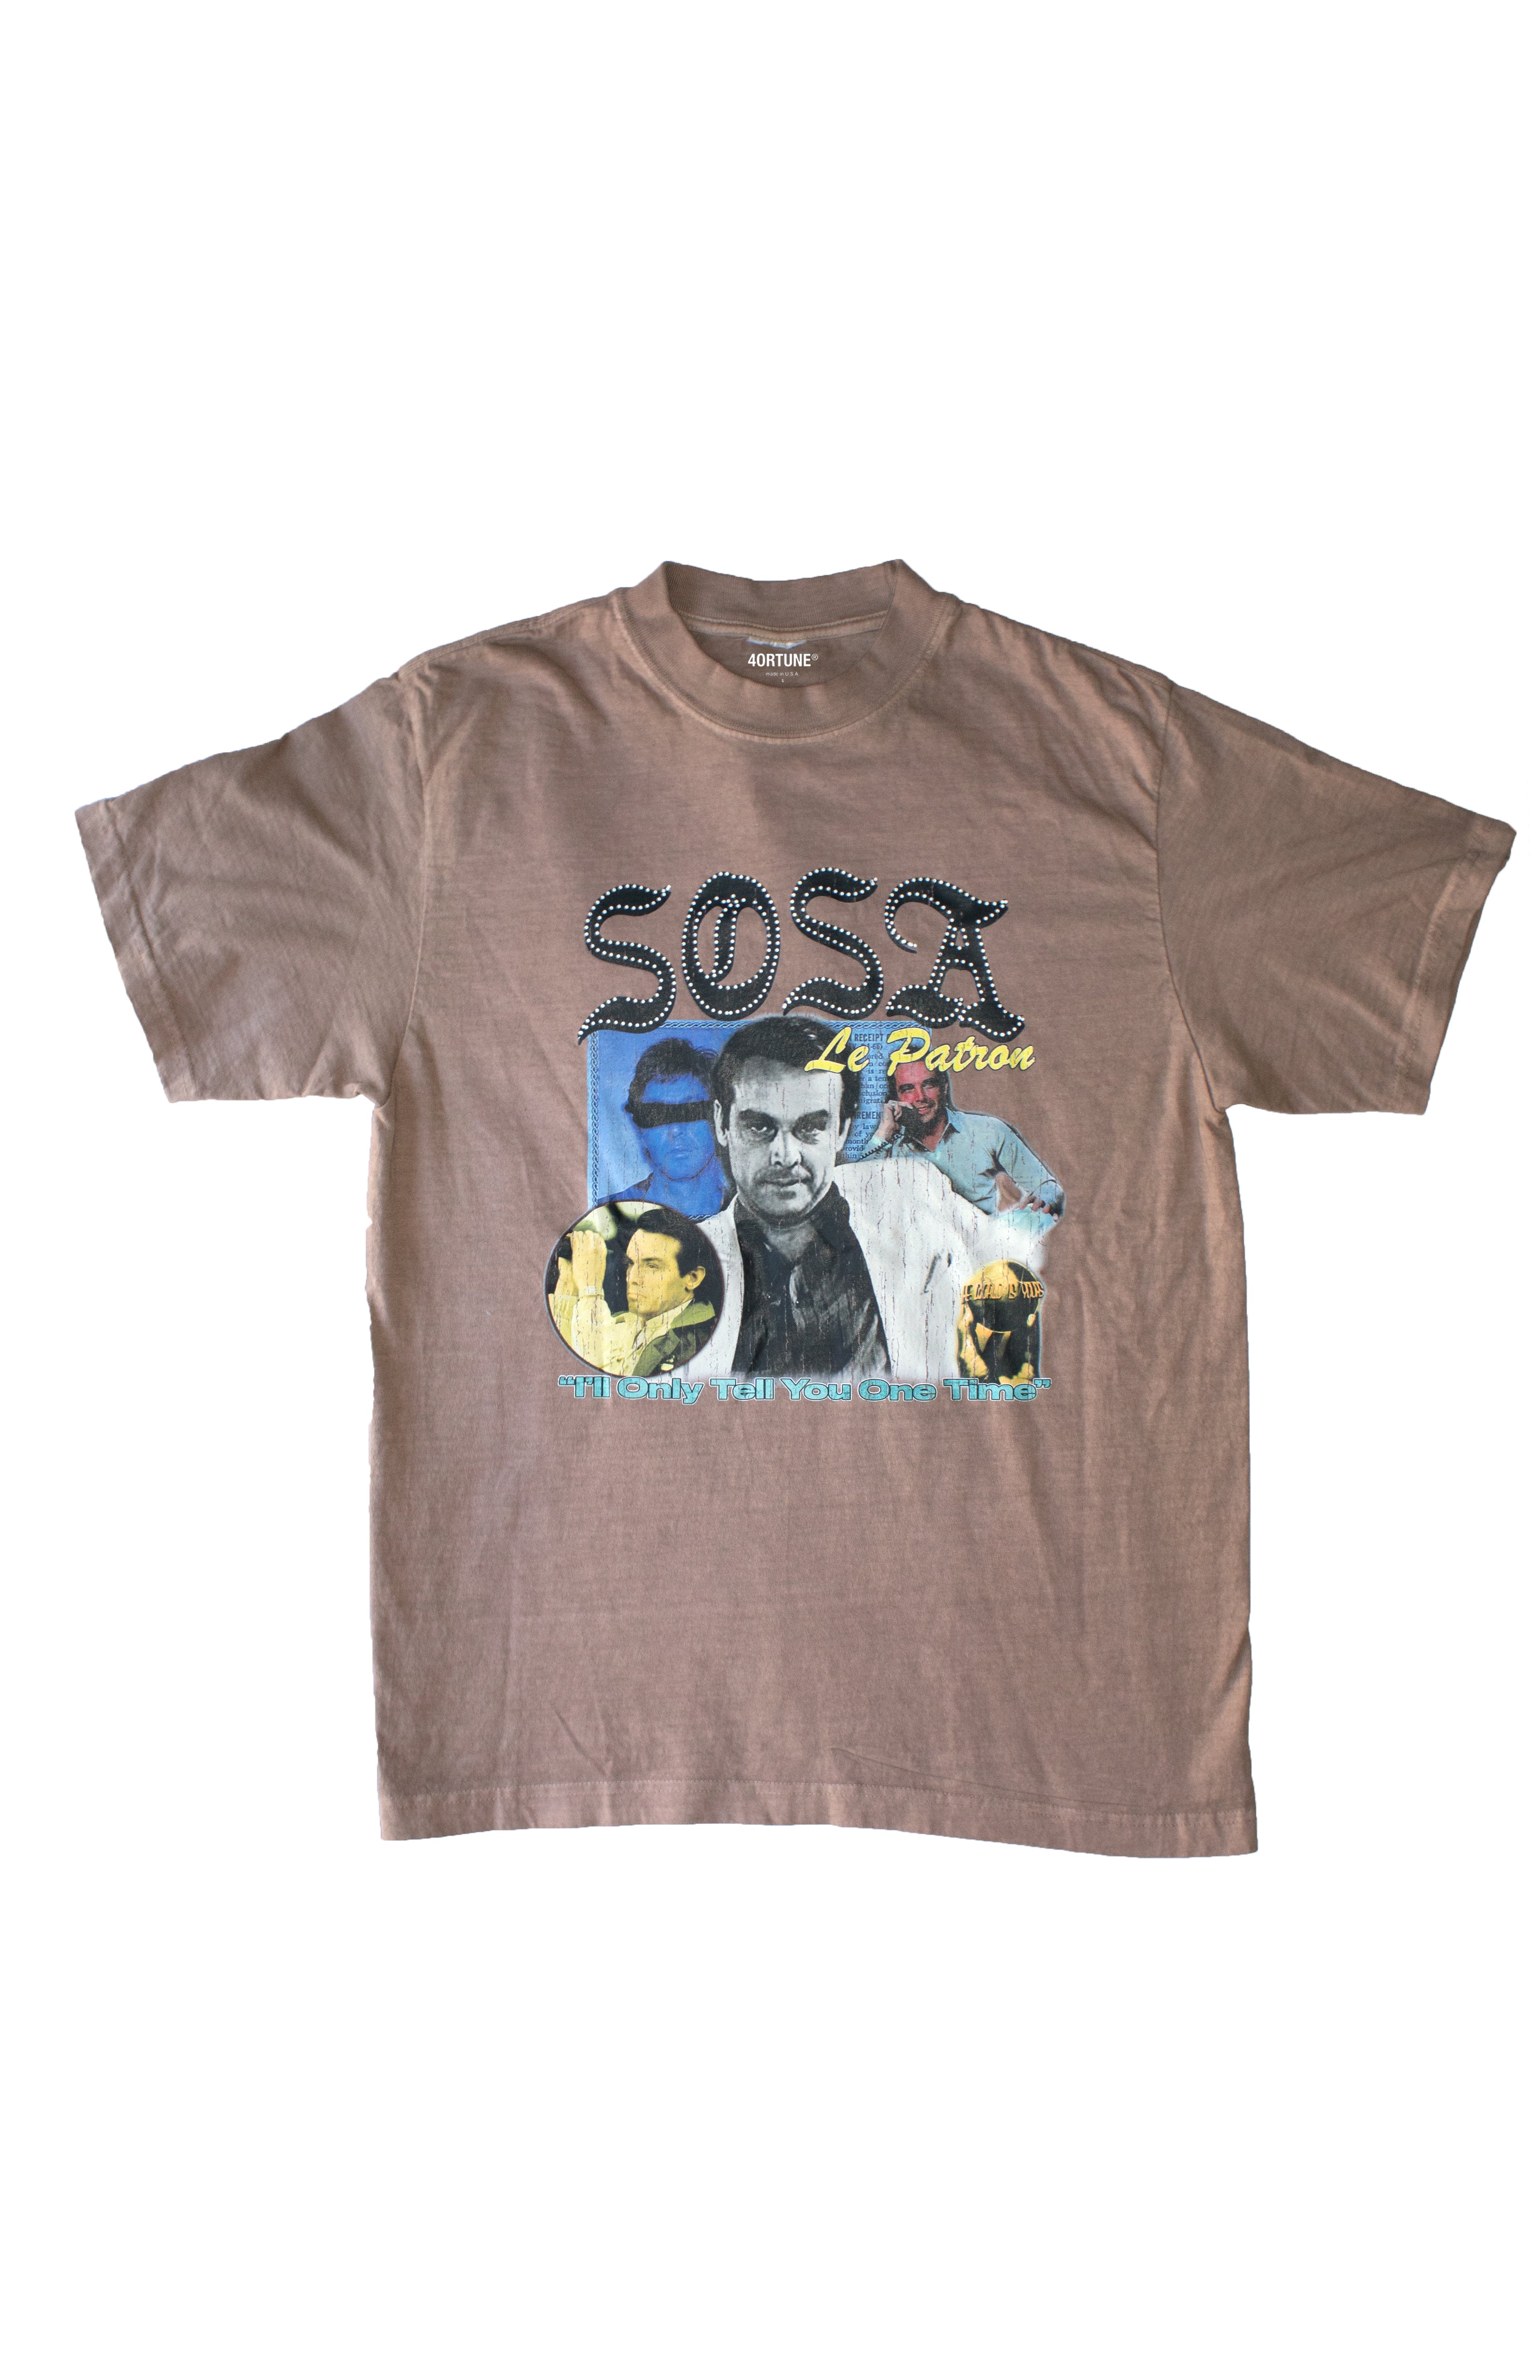 Sosa T-Shirt